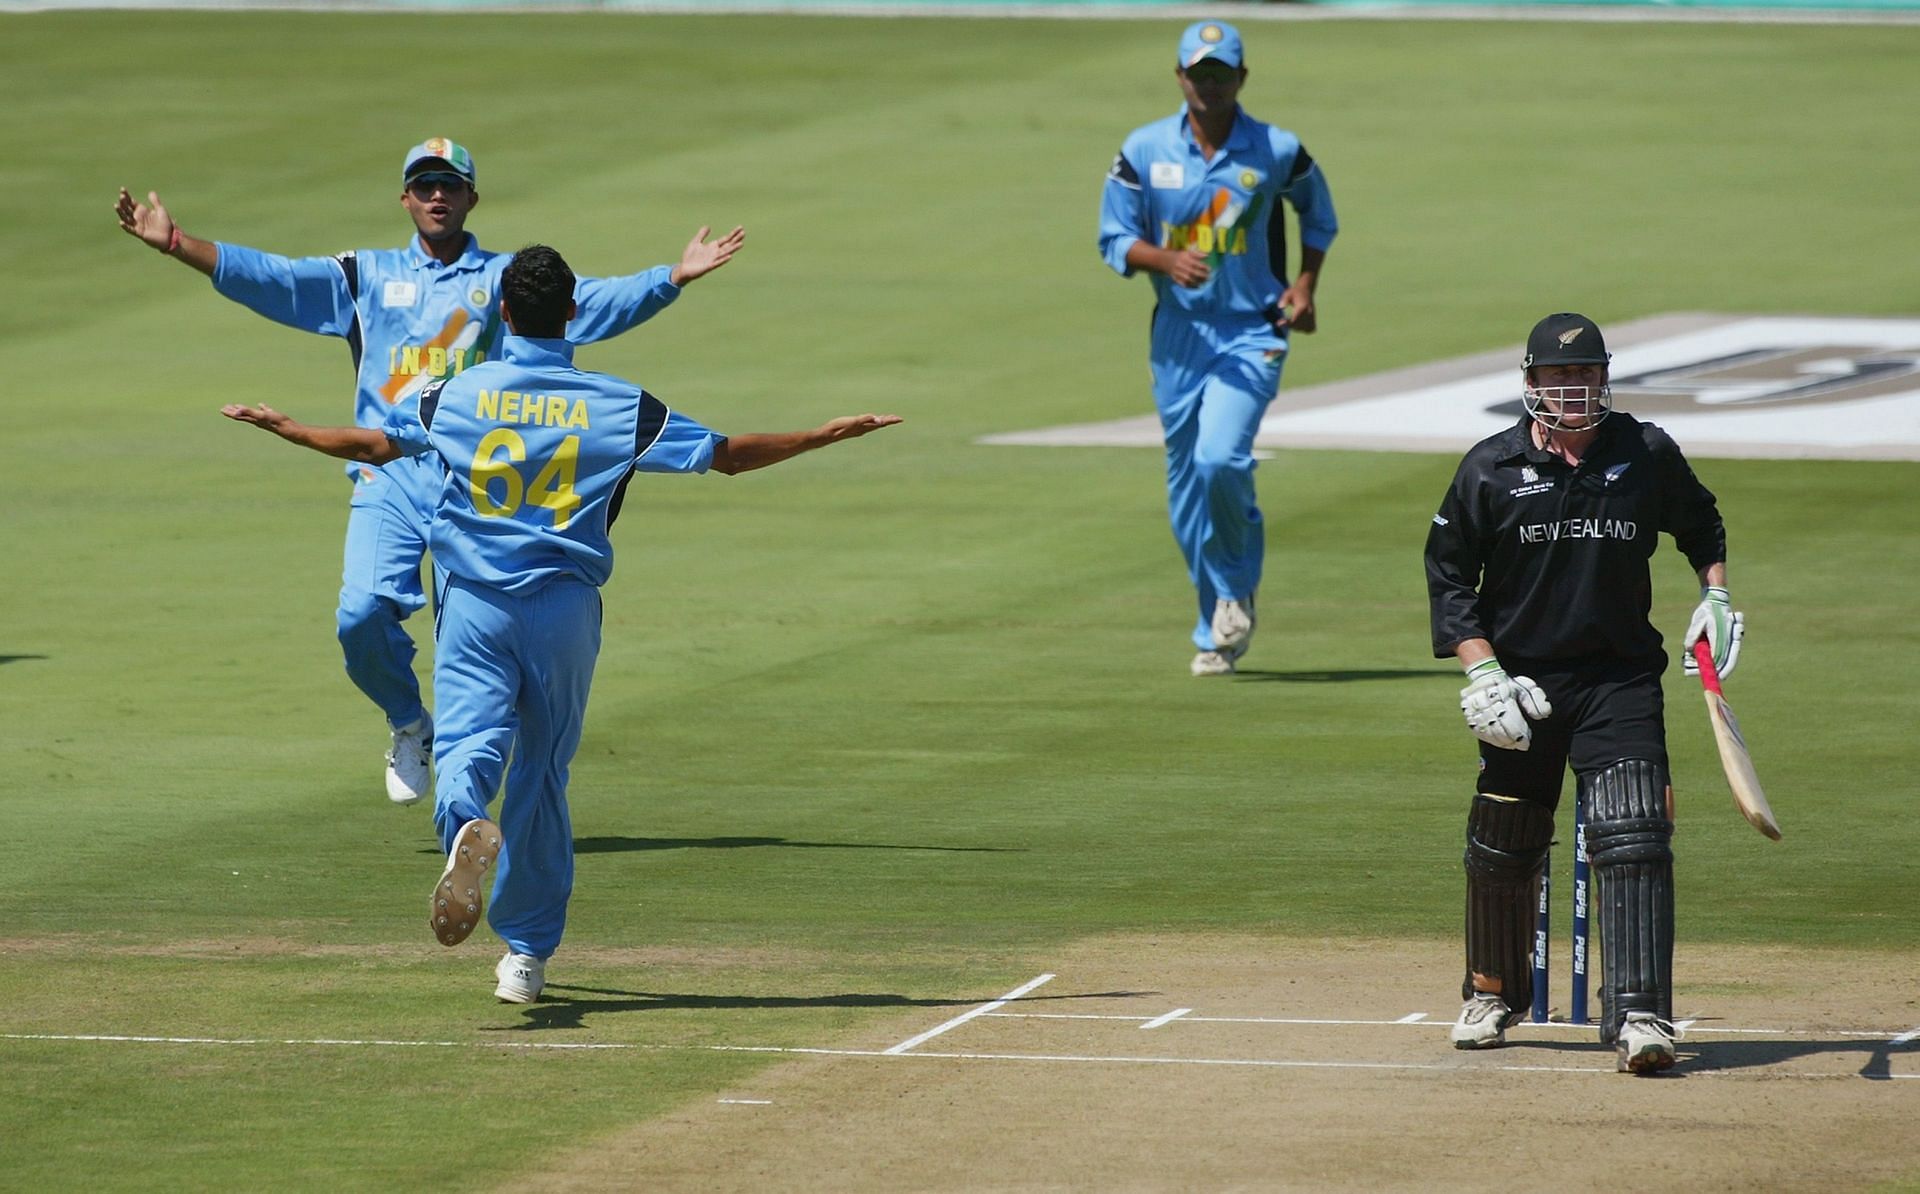 Ashish Nehra and Sourav Ganguly of India celebrate the wicket of Scott Styris of New Zealand